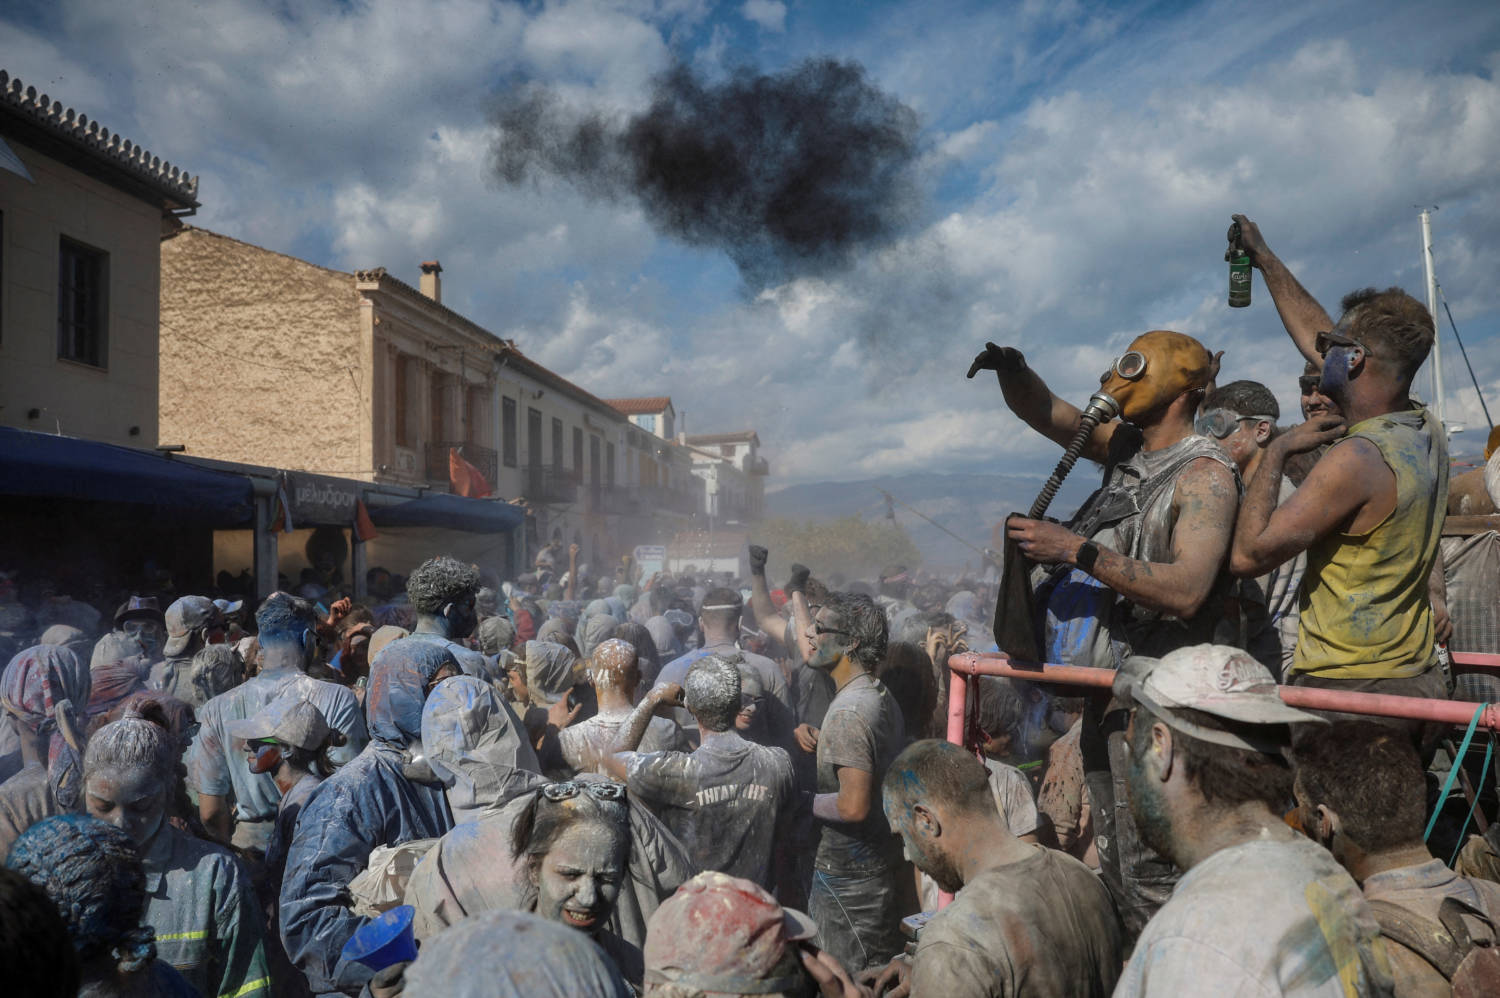 Flour Flies In Old Greek Carnival Tradition